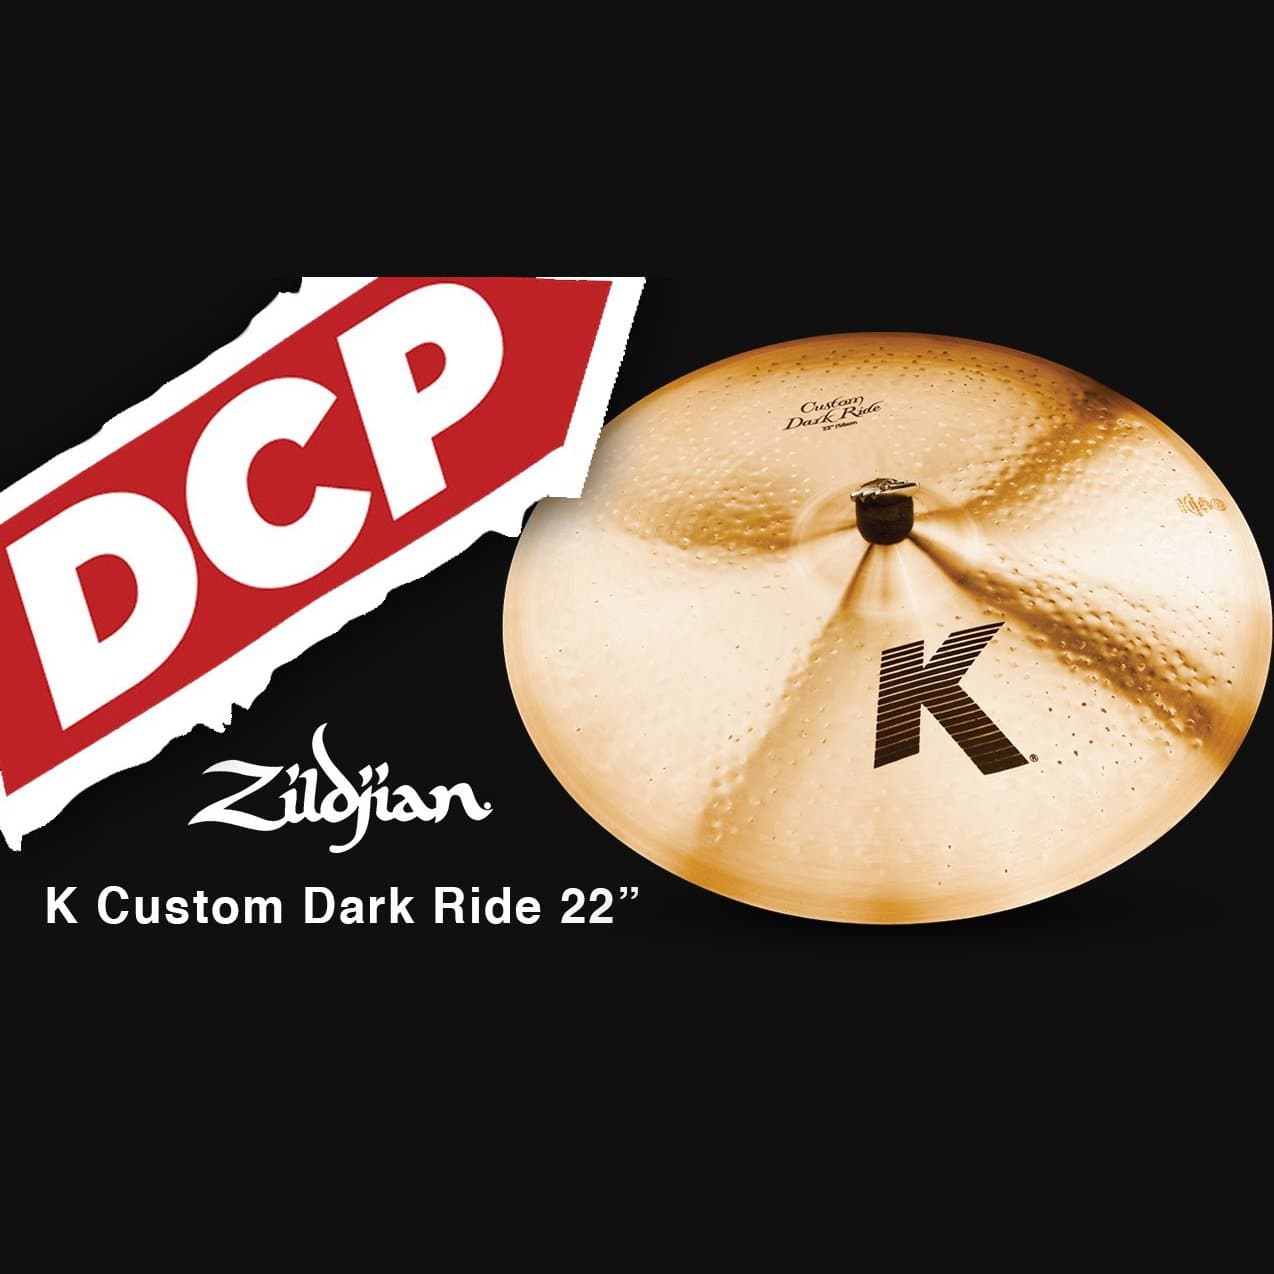 Zildjian K Custom Dark Ride Cymbal 22